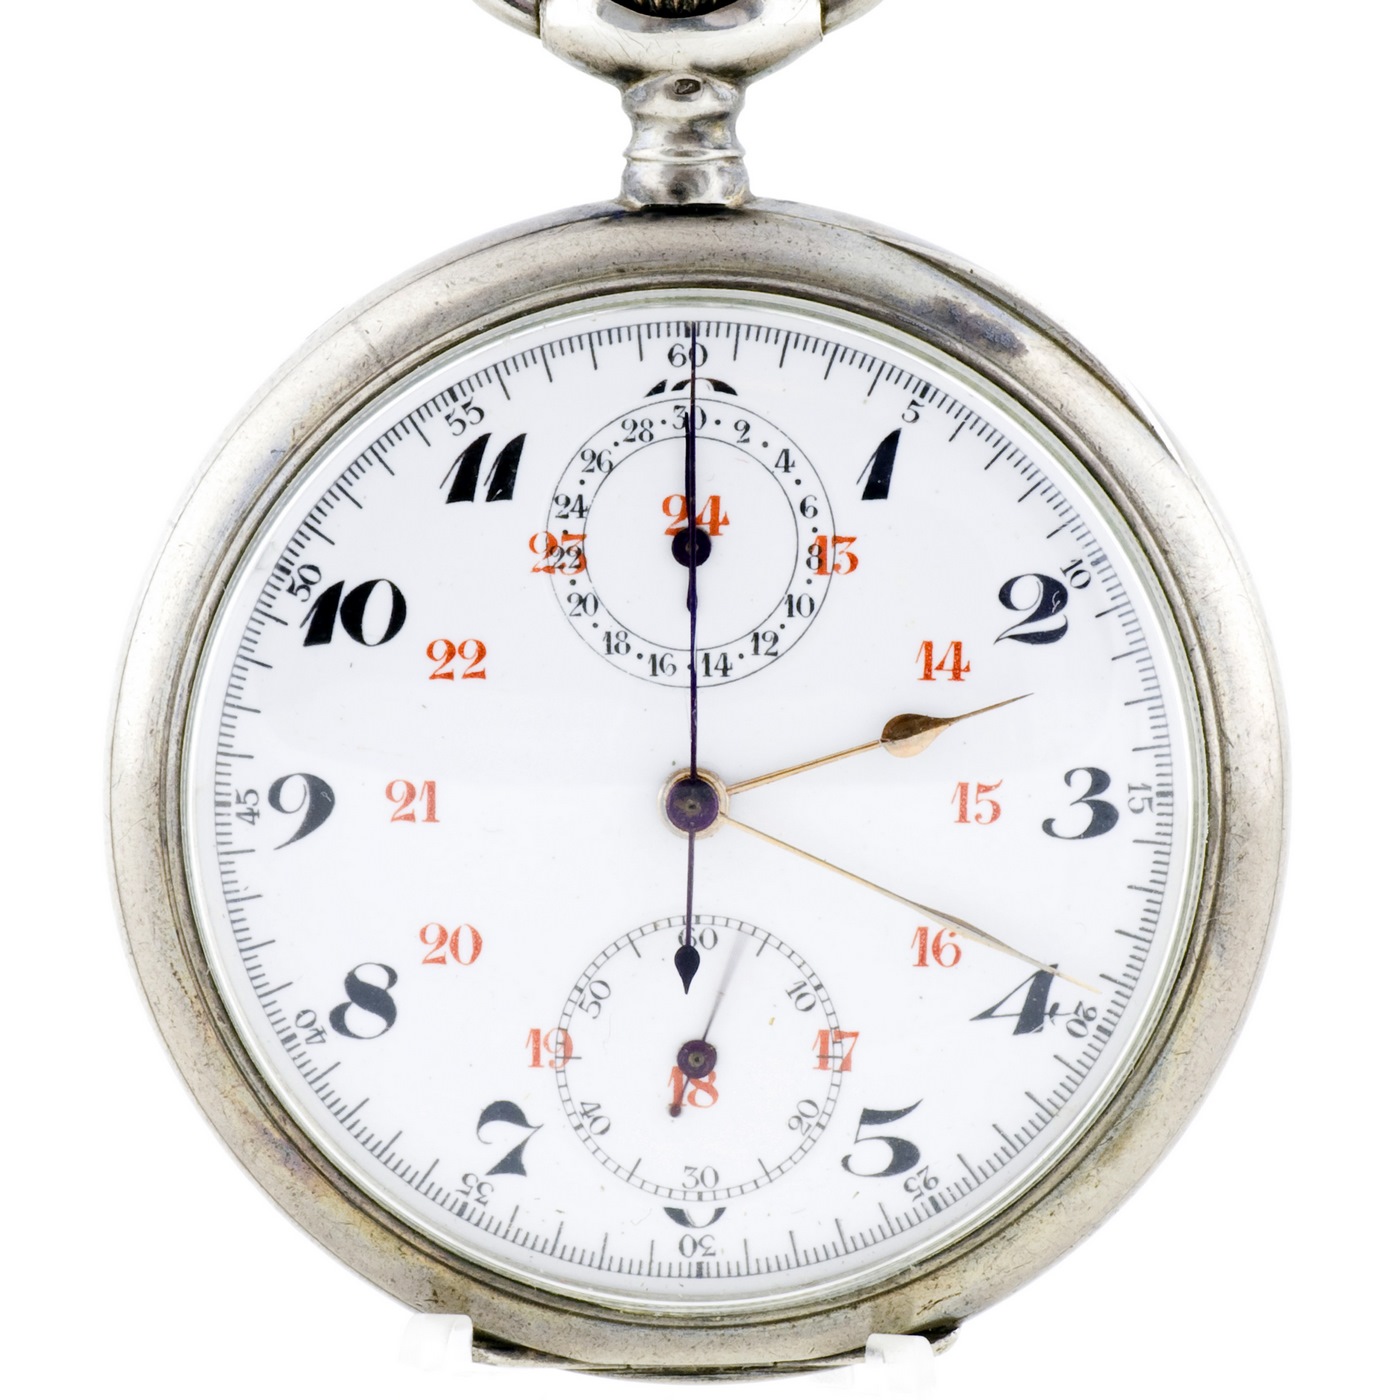 Swiss Chronometer Watch, Lepine and remontoir. Switzerland, ca. 1890.